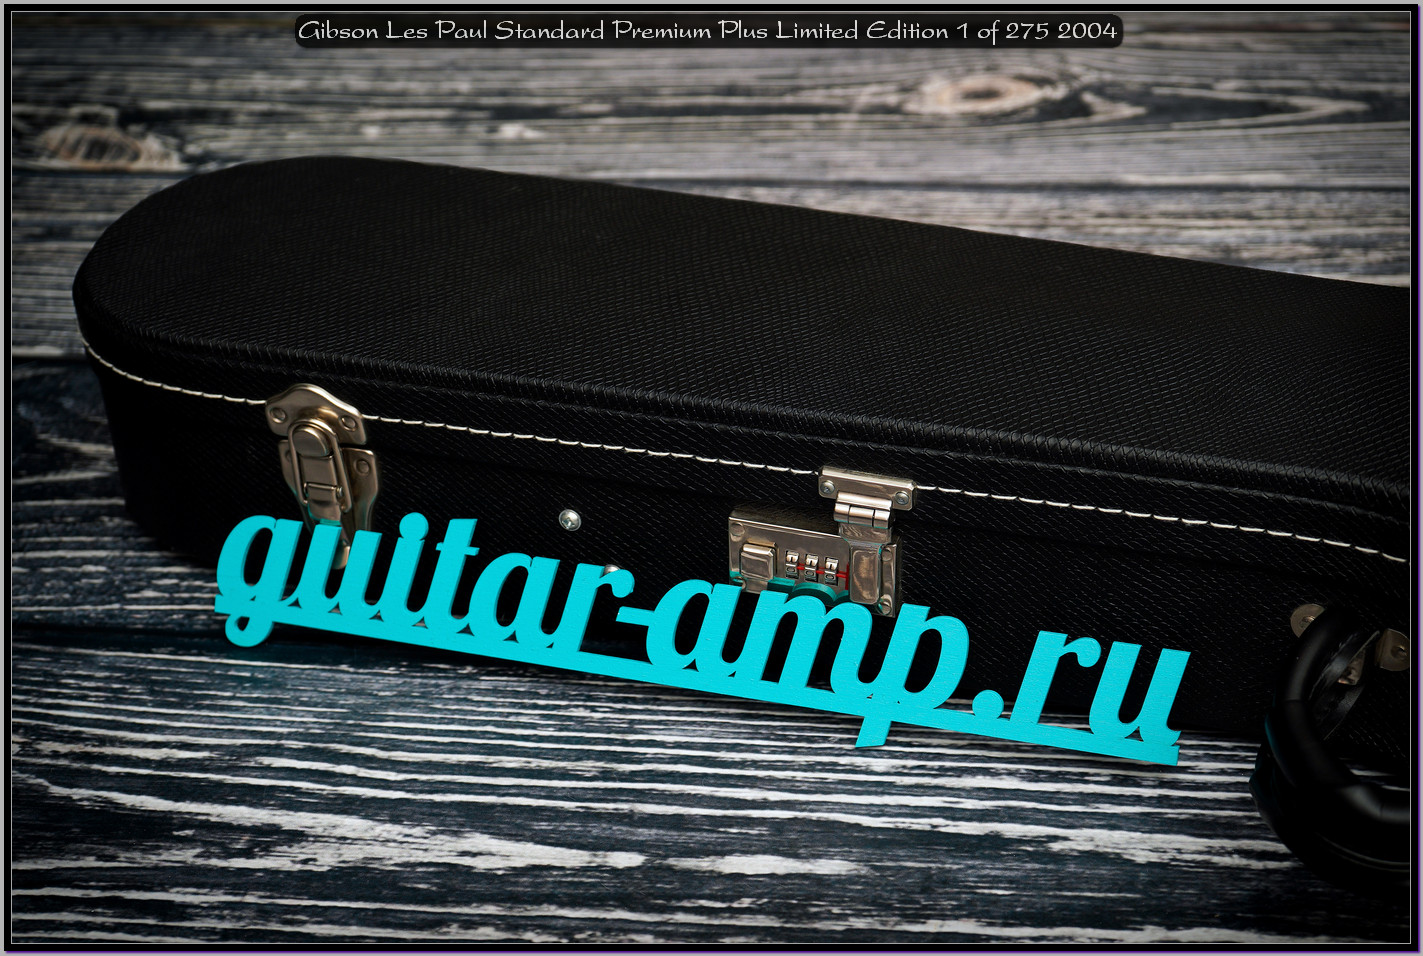 Gibson Les Paul Standard Premium Plus Limited Edition 1 of 275 2004 17_x1400.jpg